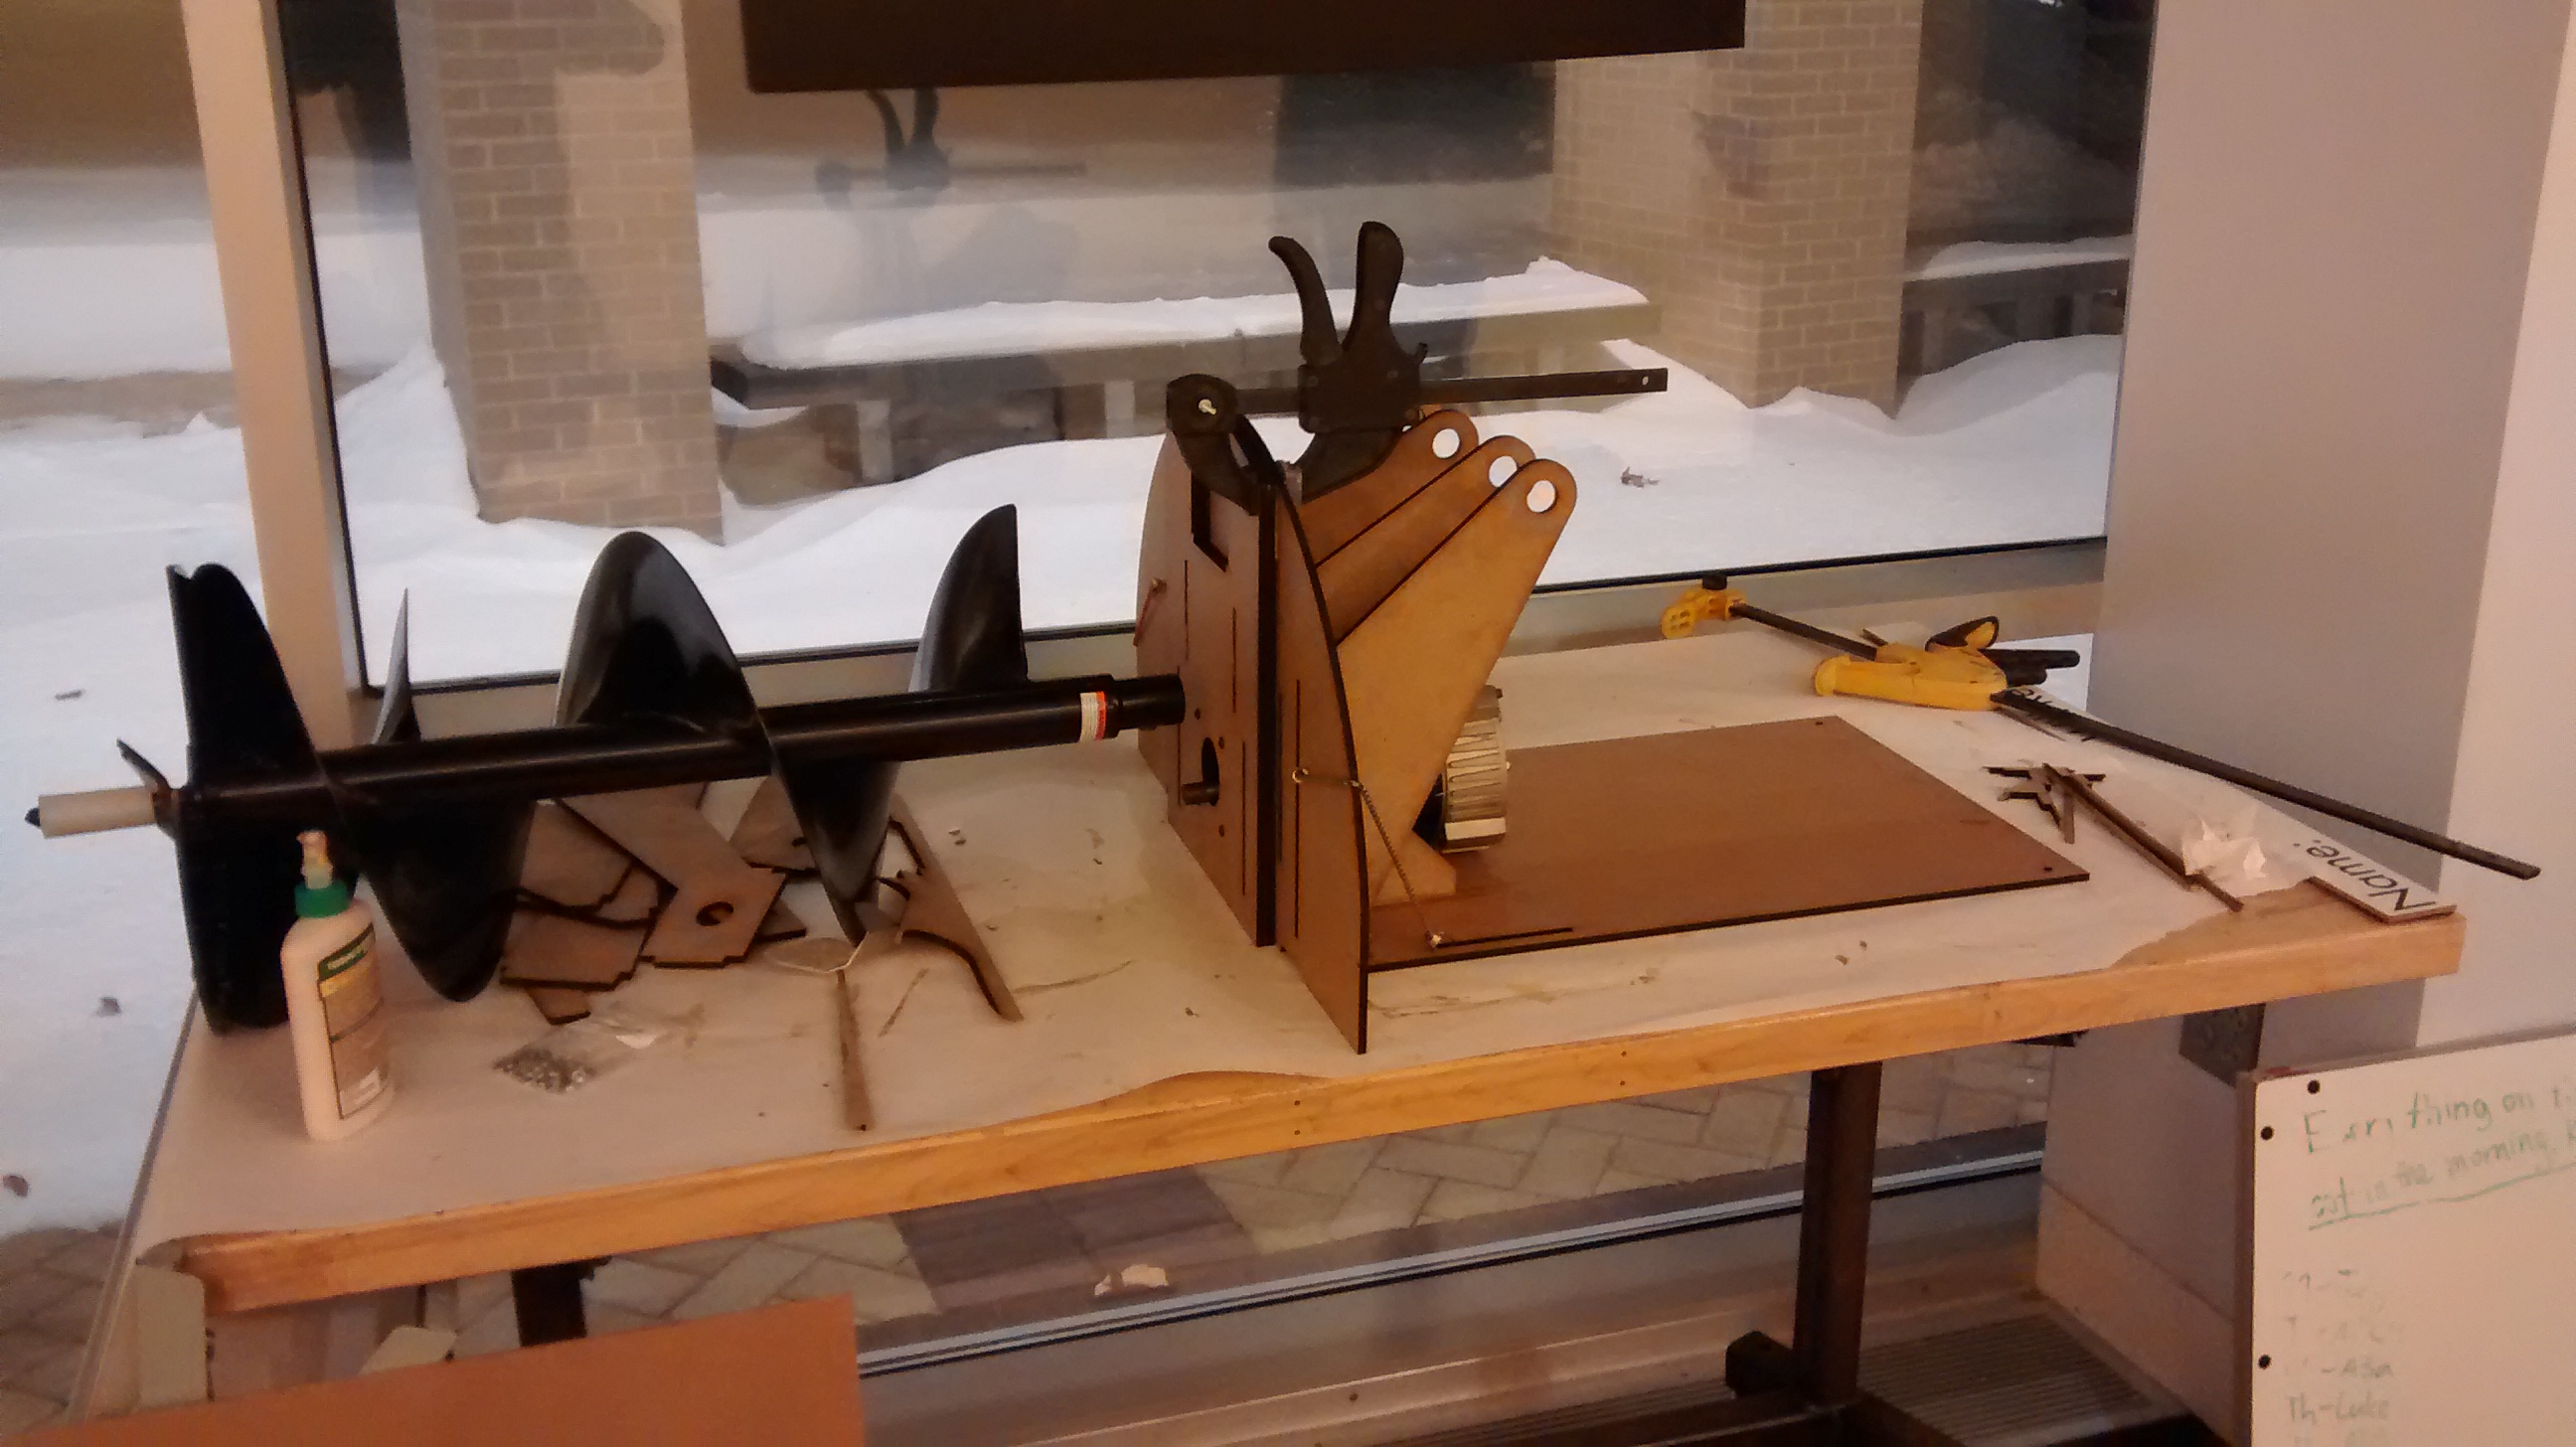 Assembling the MDF sled.